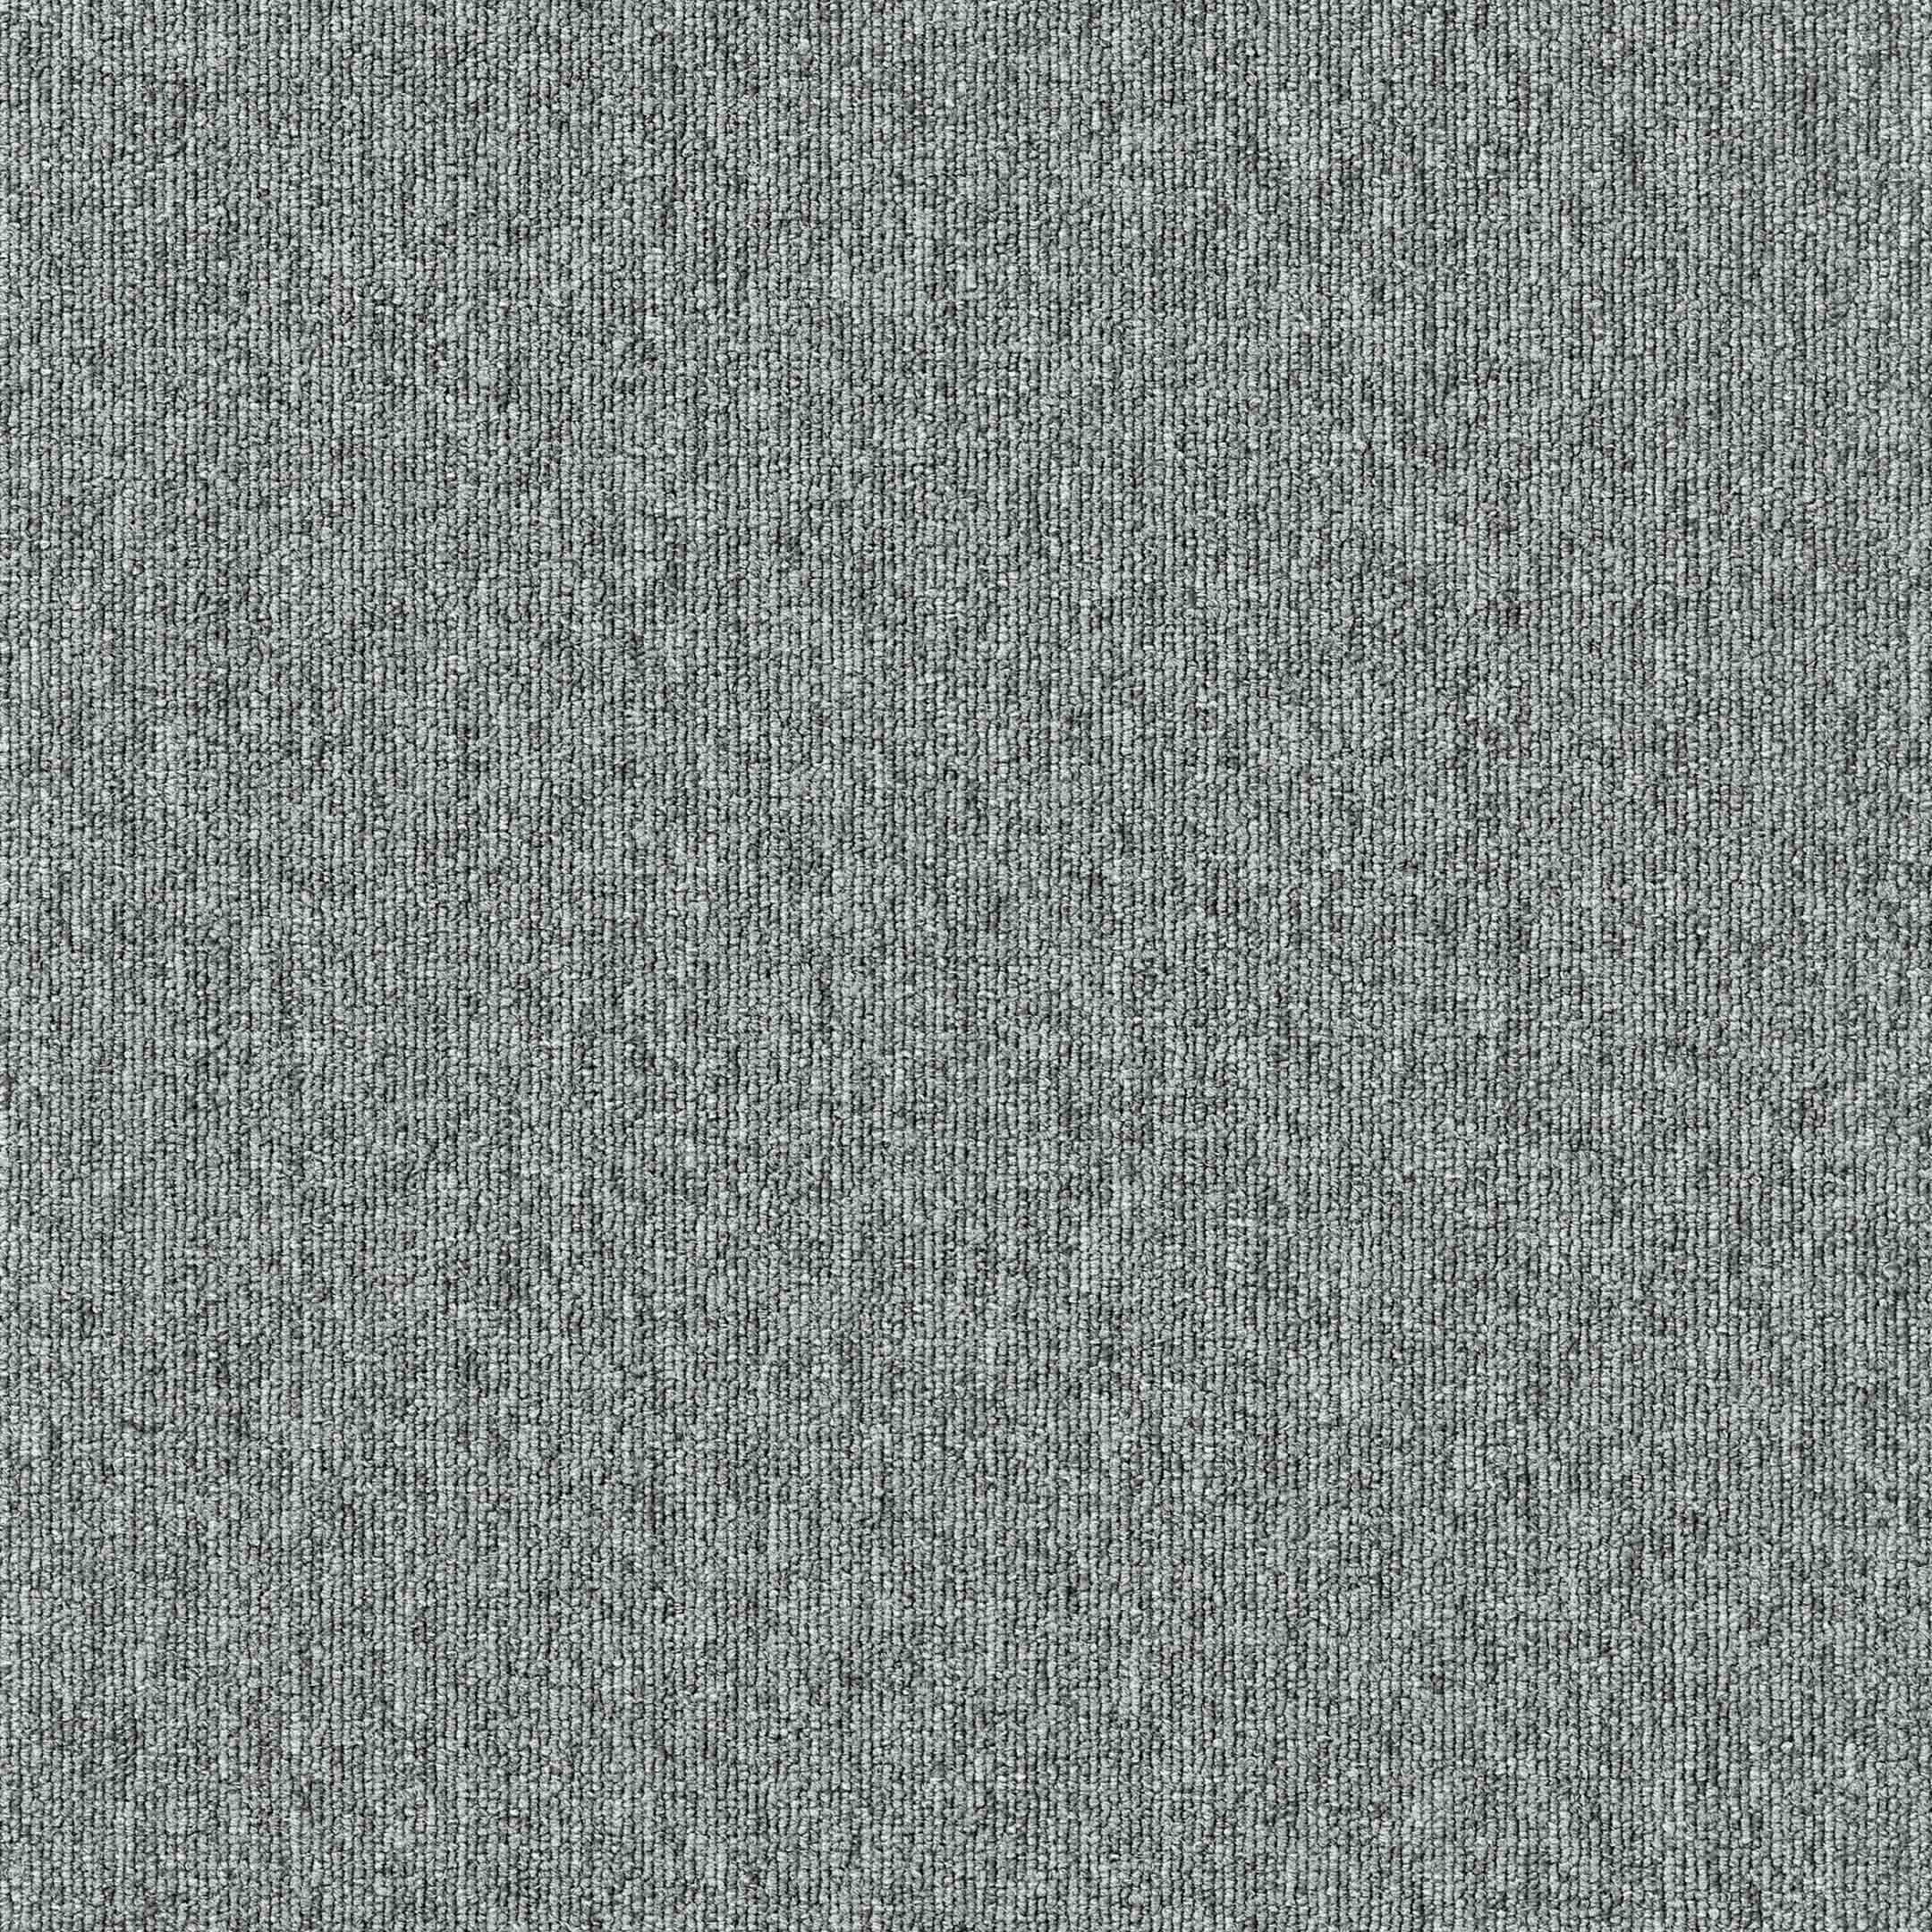 фото Ковровая плитка tarkett sky orig pvc 393-86 светло-серый 5 кв.м 0,5х0,5 м